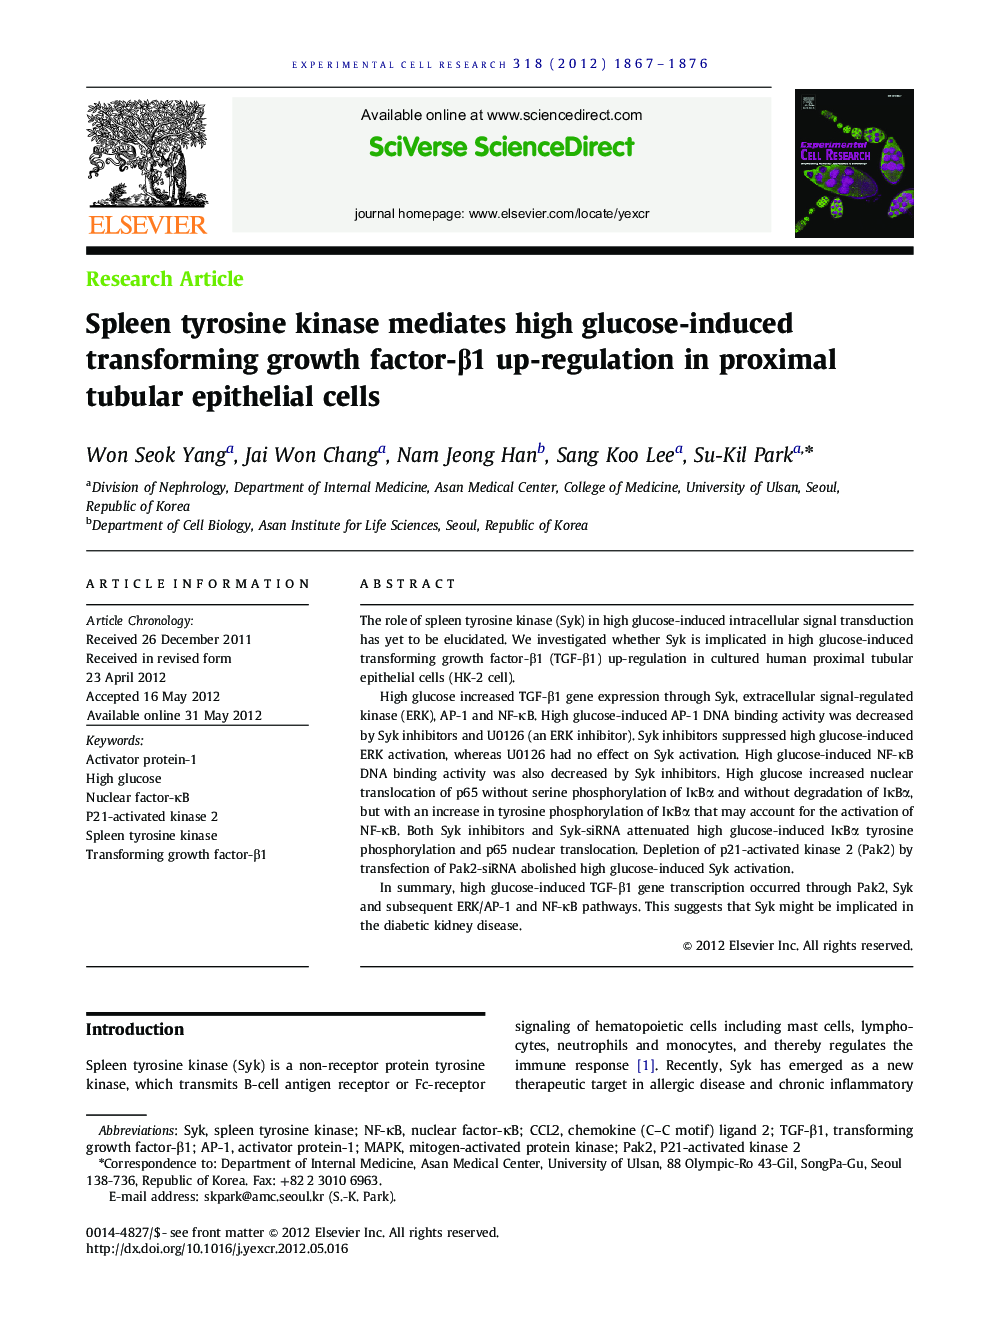 Spleen tyrosine kinase mediates high glucose-induced transforming growth factor-β1 up-regulation in proximal tubular epithelial cells